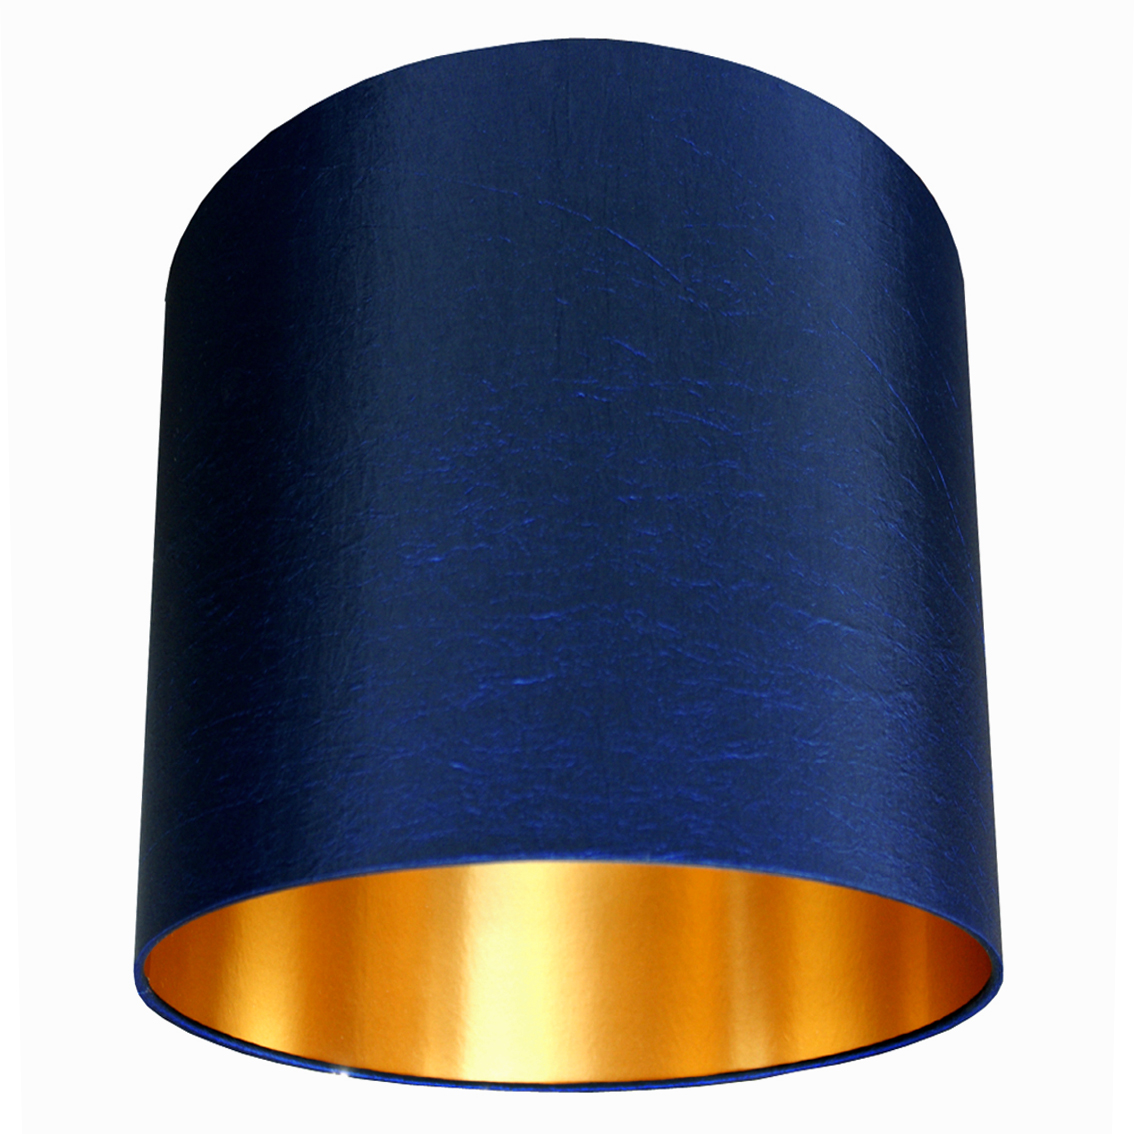 Midnight Blue Handmade Lampshade with 